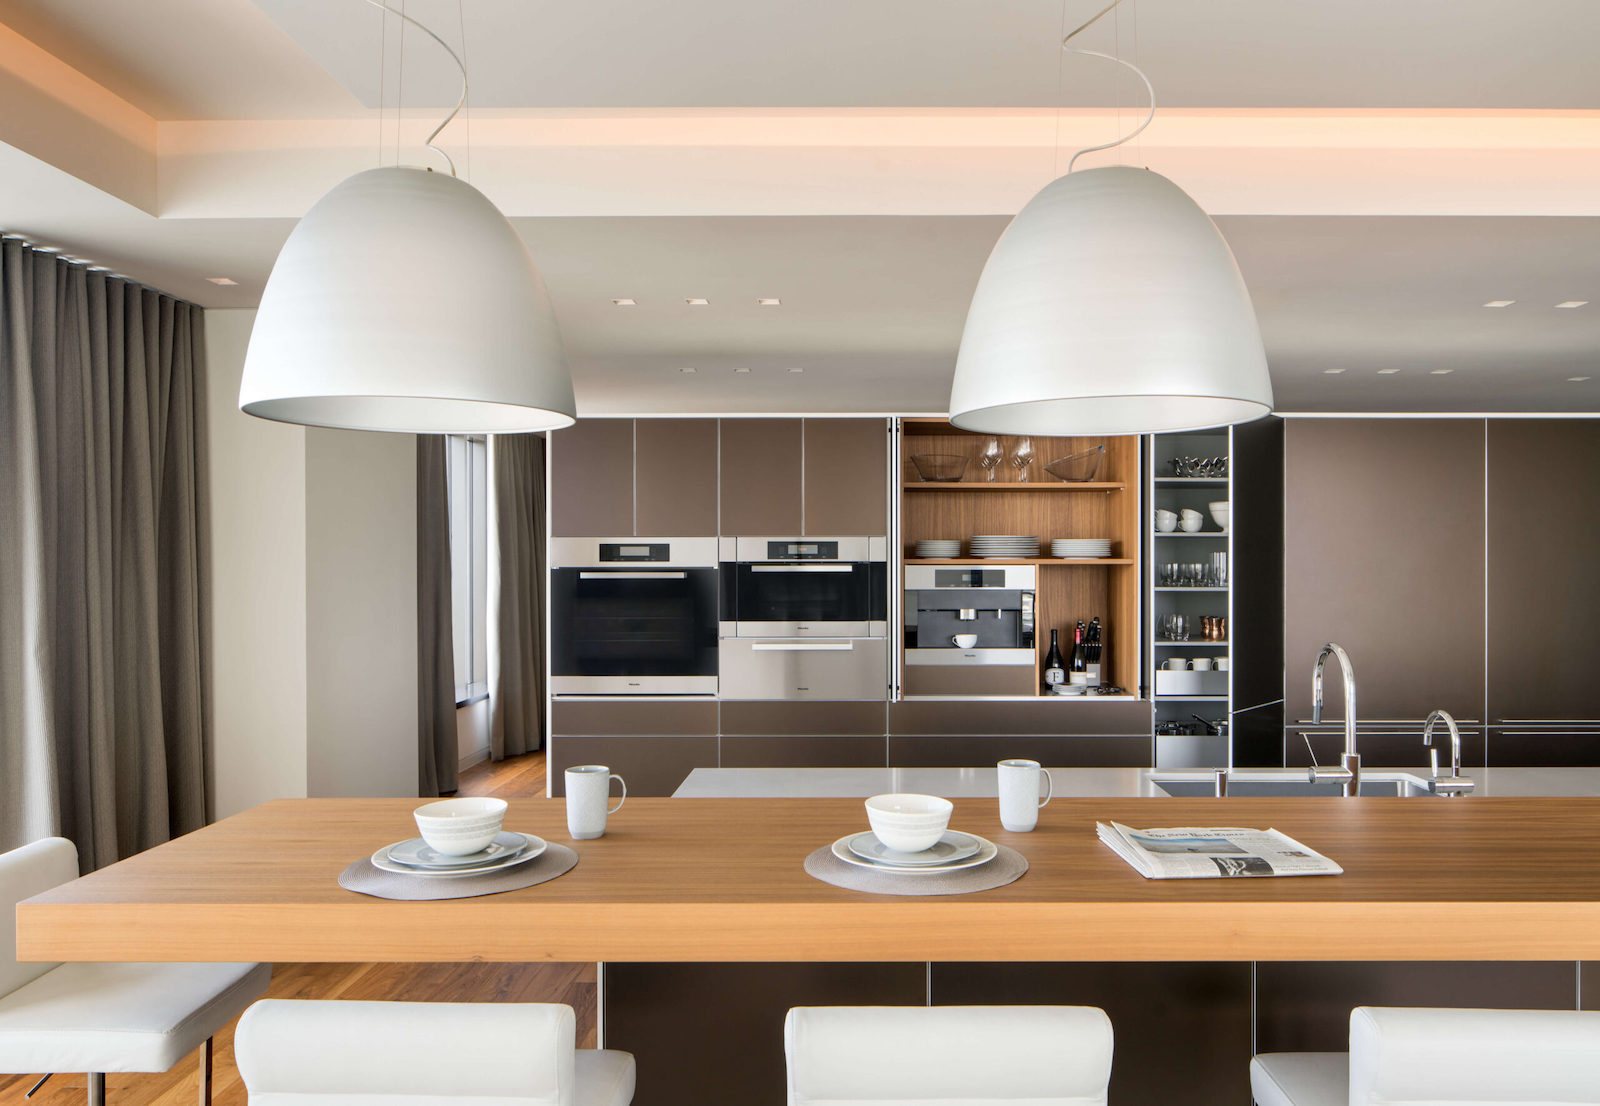 penthouse estate kitchen design